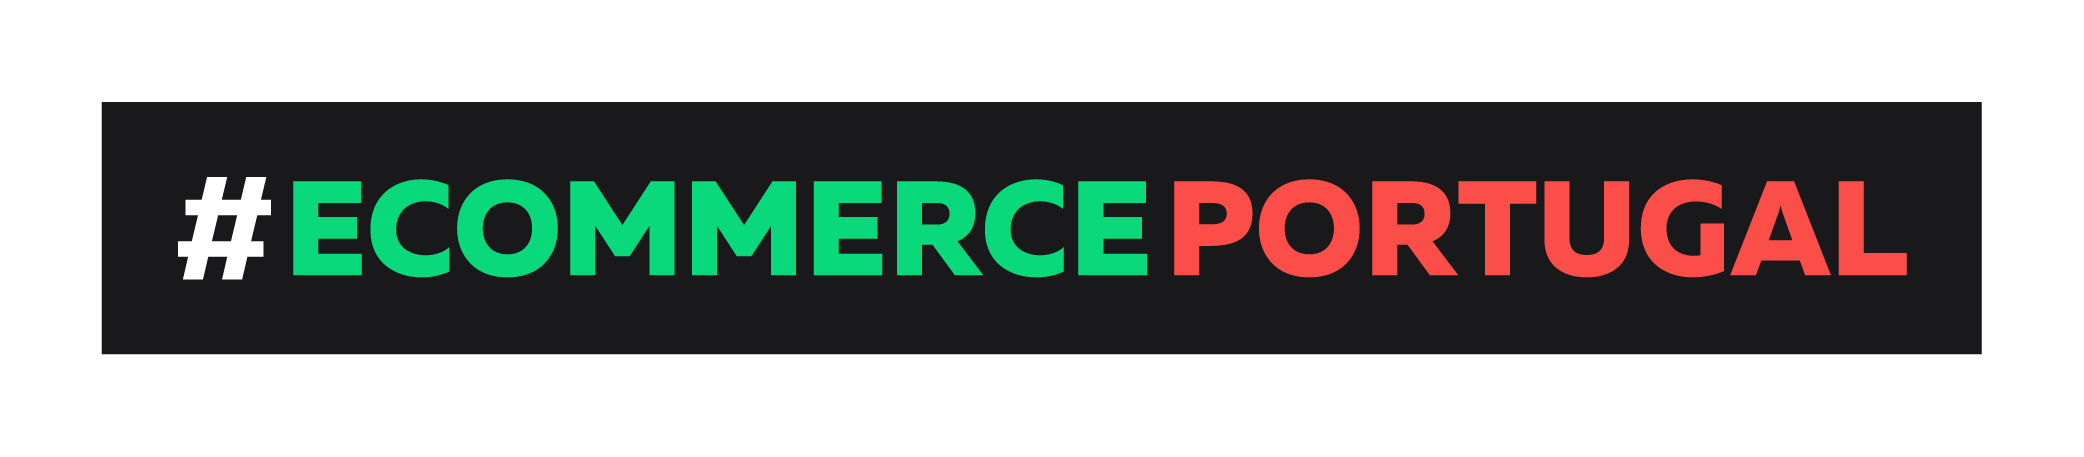 E-Commerce Portugal Logo